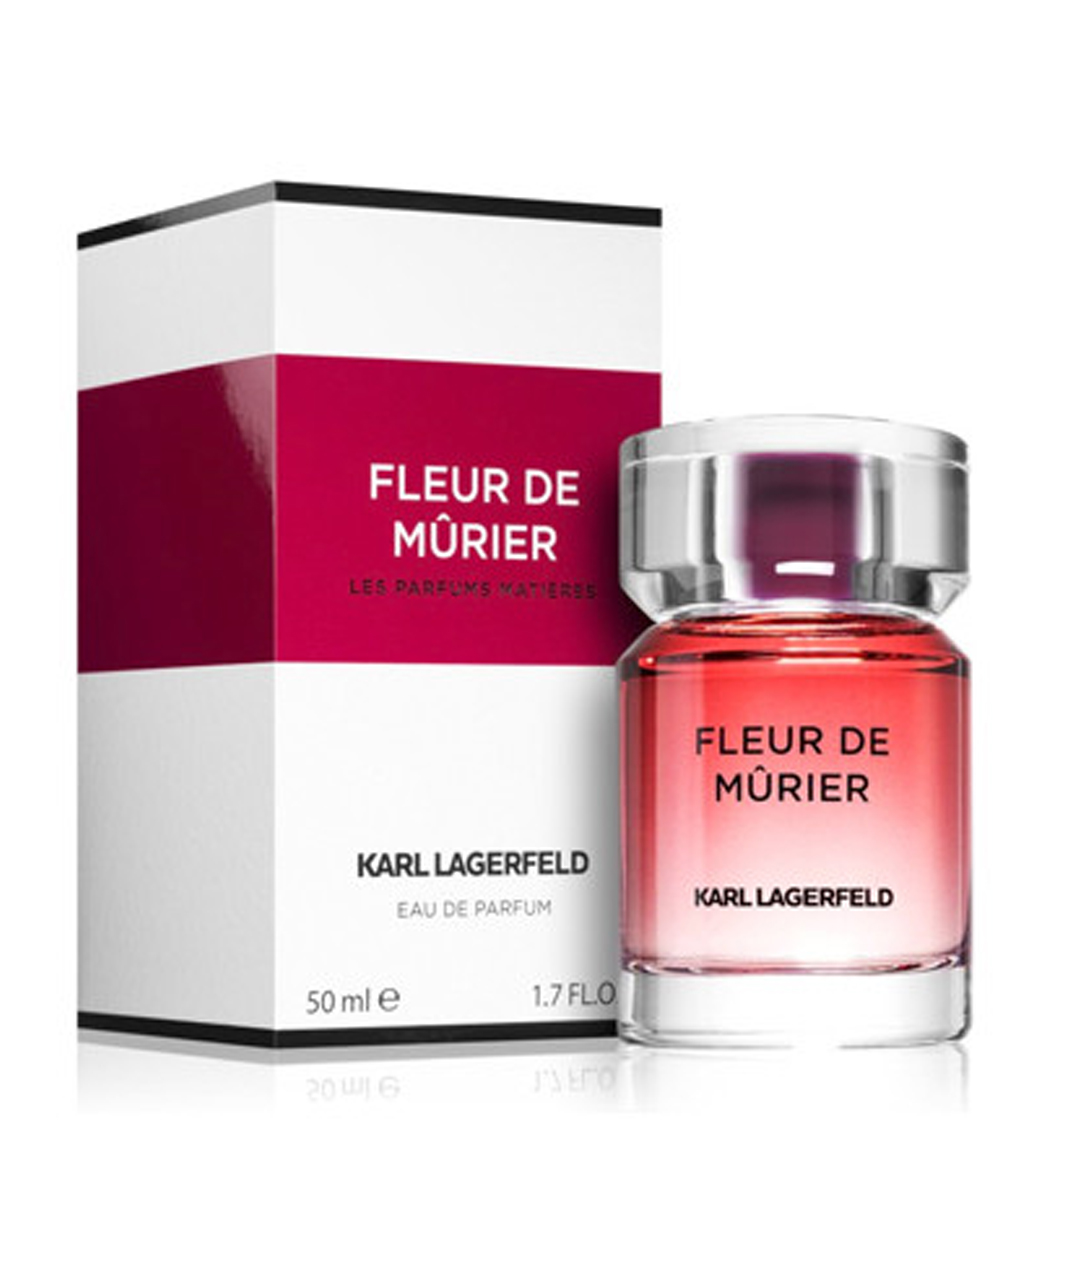 Perfume «Karl Lagerfeld» Fleur De Murier, for women, 50 ml